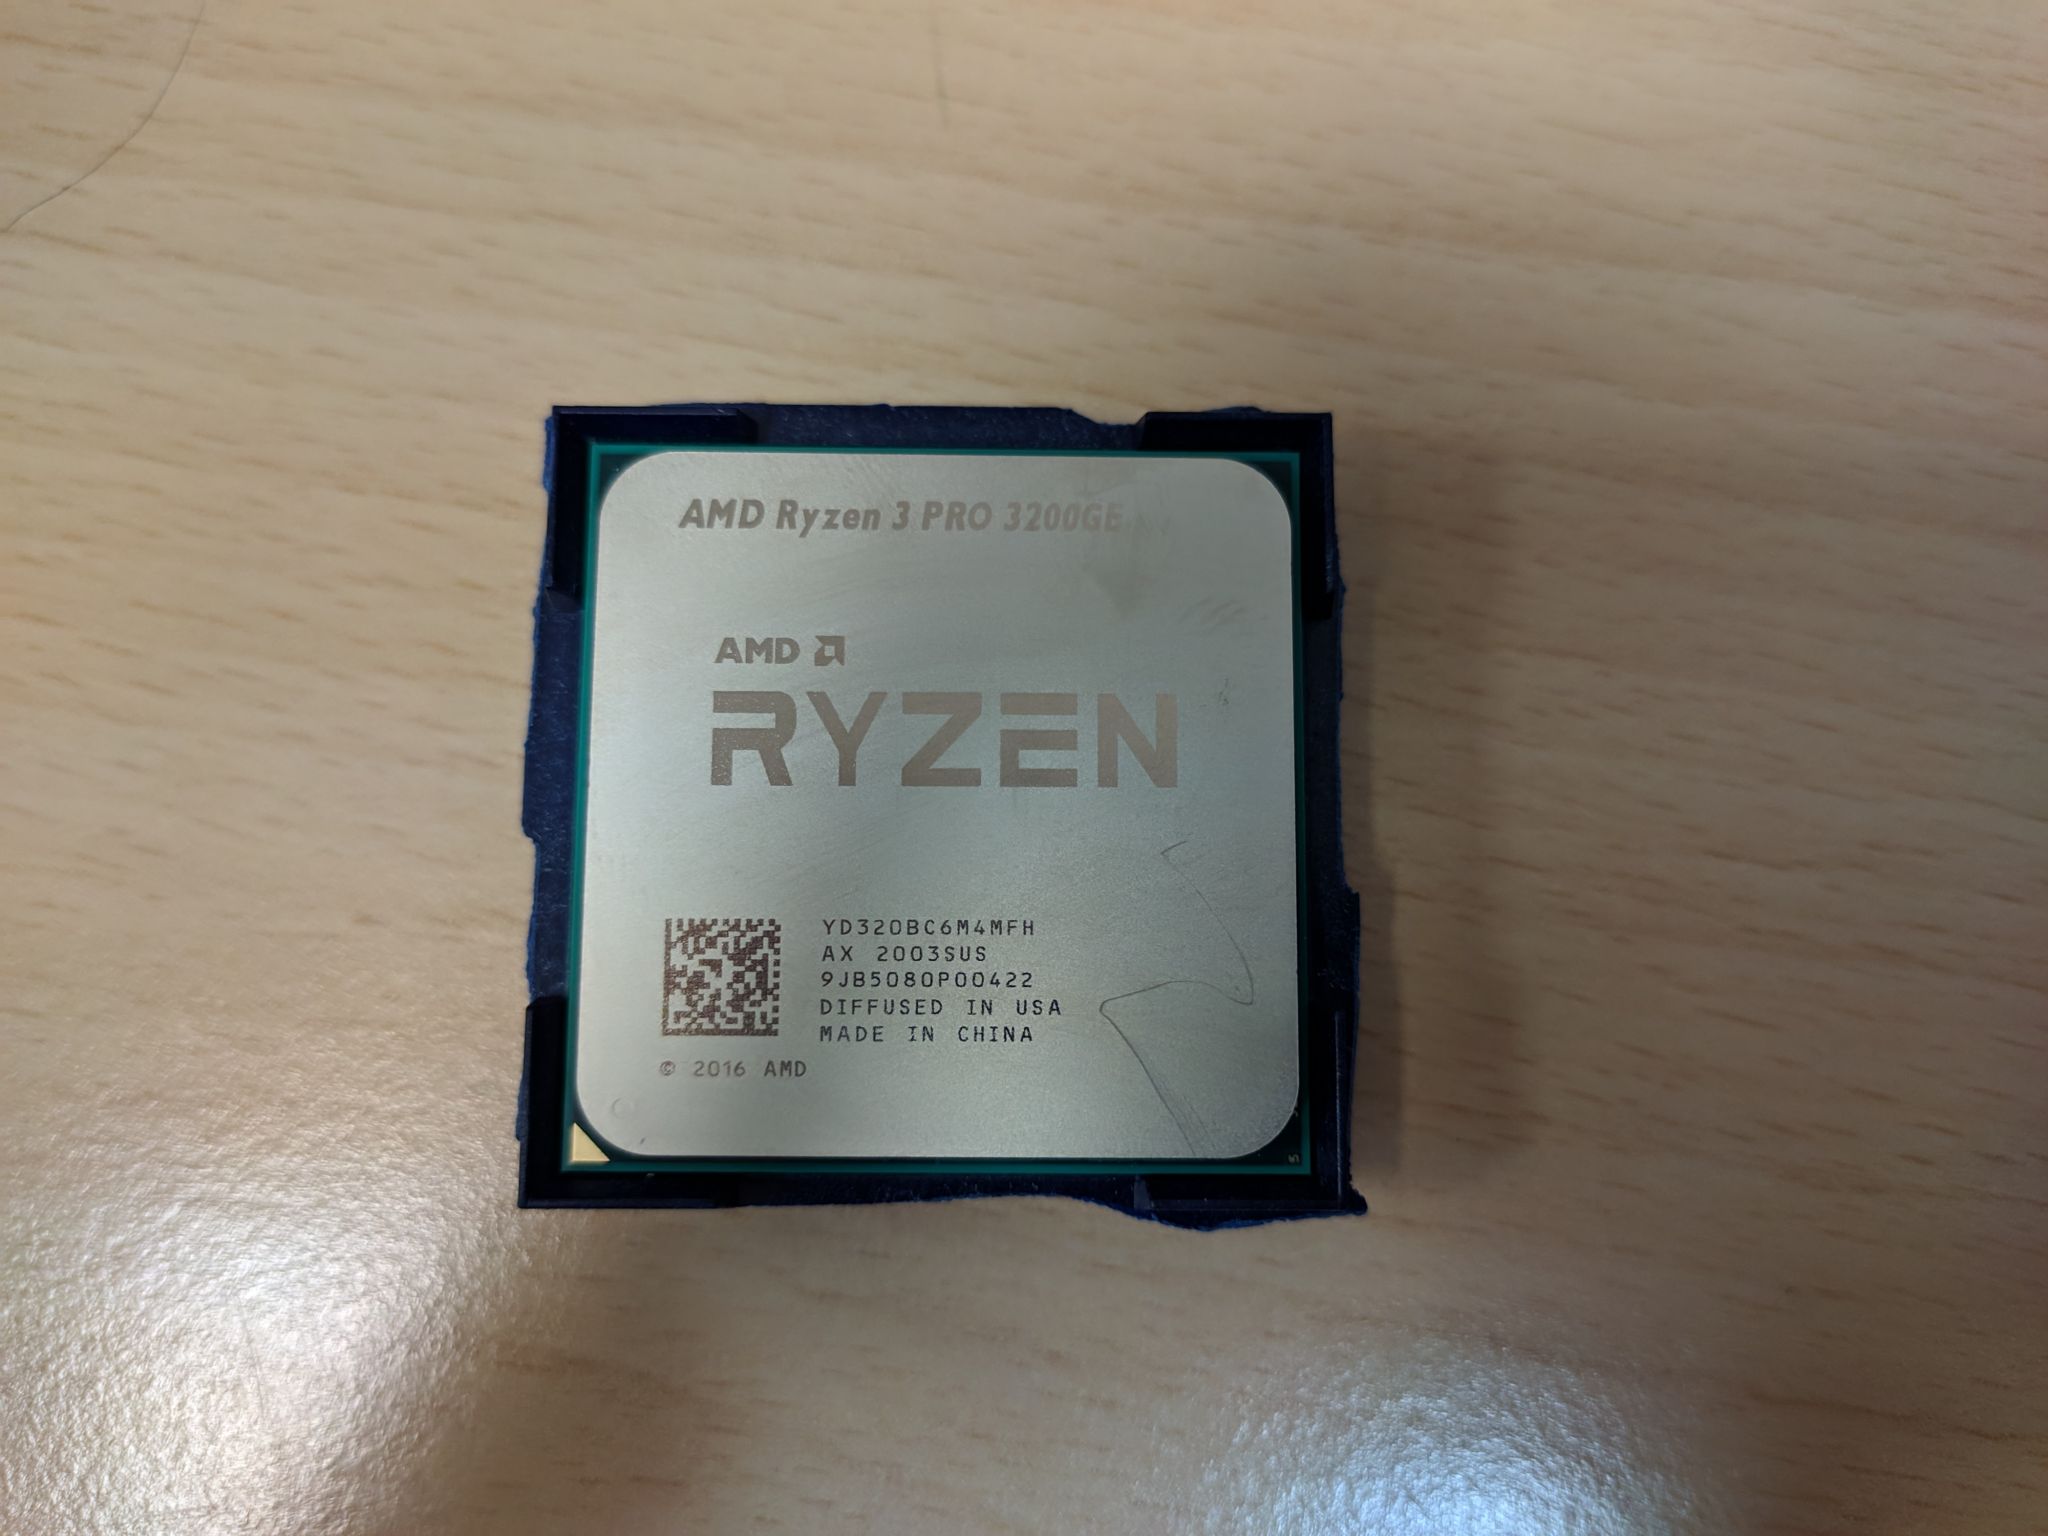 3 pro 3200g. Ryzen 3 3200g. AMD Ryzen 3 3200g OEM. Ryzen 3 Pro 3200g процессор. Процессор <am4> Ryzen 3 3200g Box.